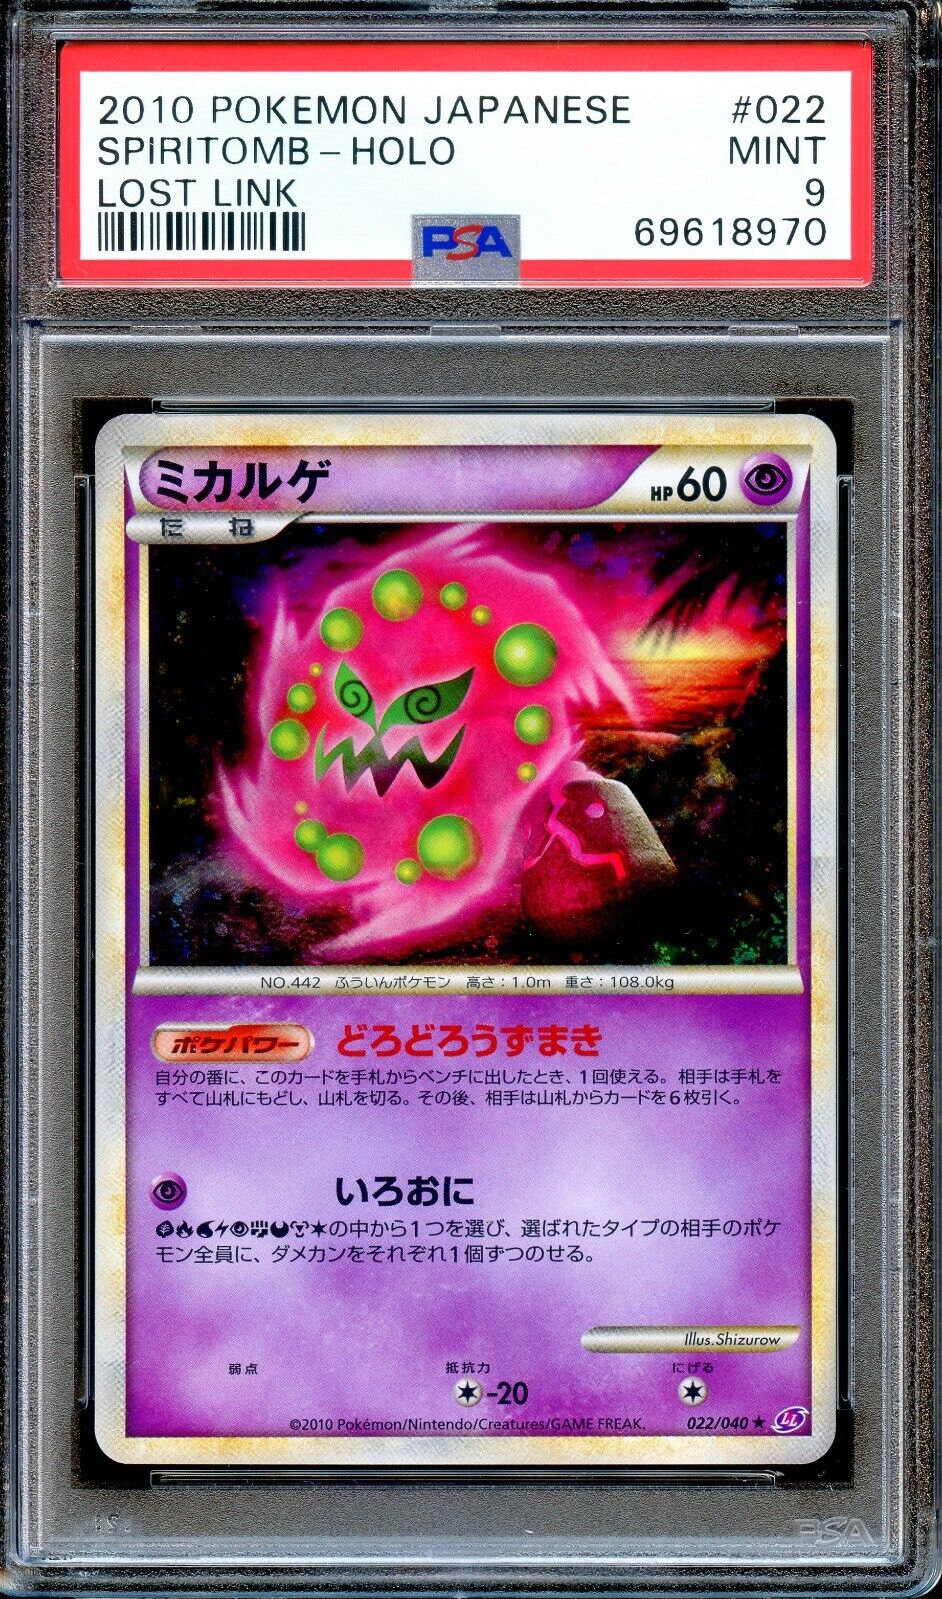 PSA 9 Spiritomb 022/040 Lost Link Japanese Pokemon Card MINT